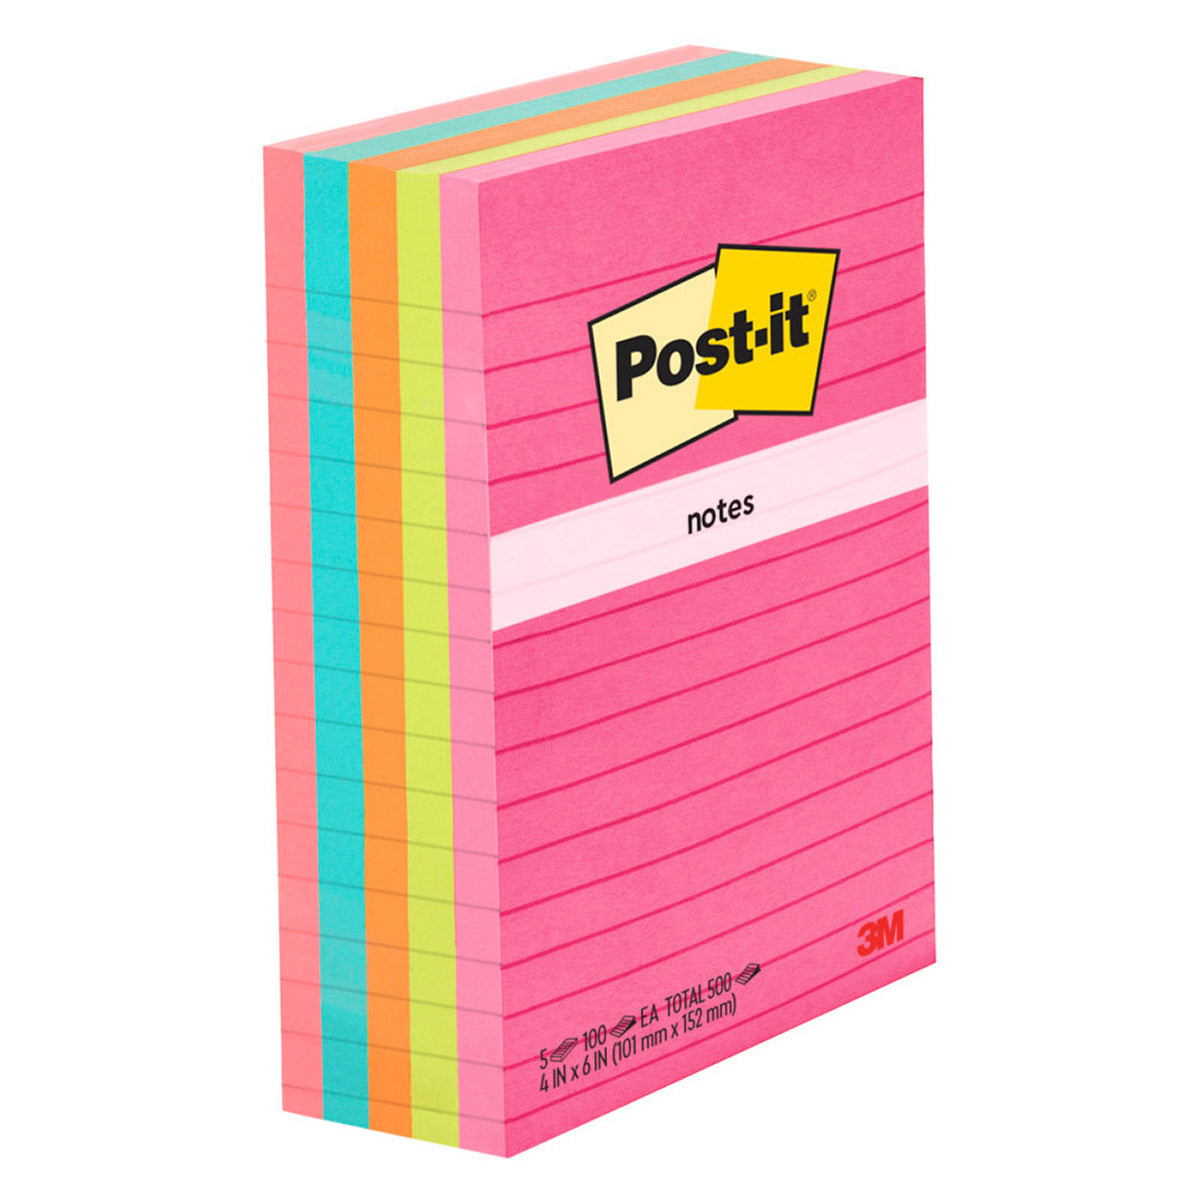 Post-it Color Notes, 1-1/2 x 2, Four Pastel Colors, 12 100-Sheet Pads/pack